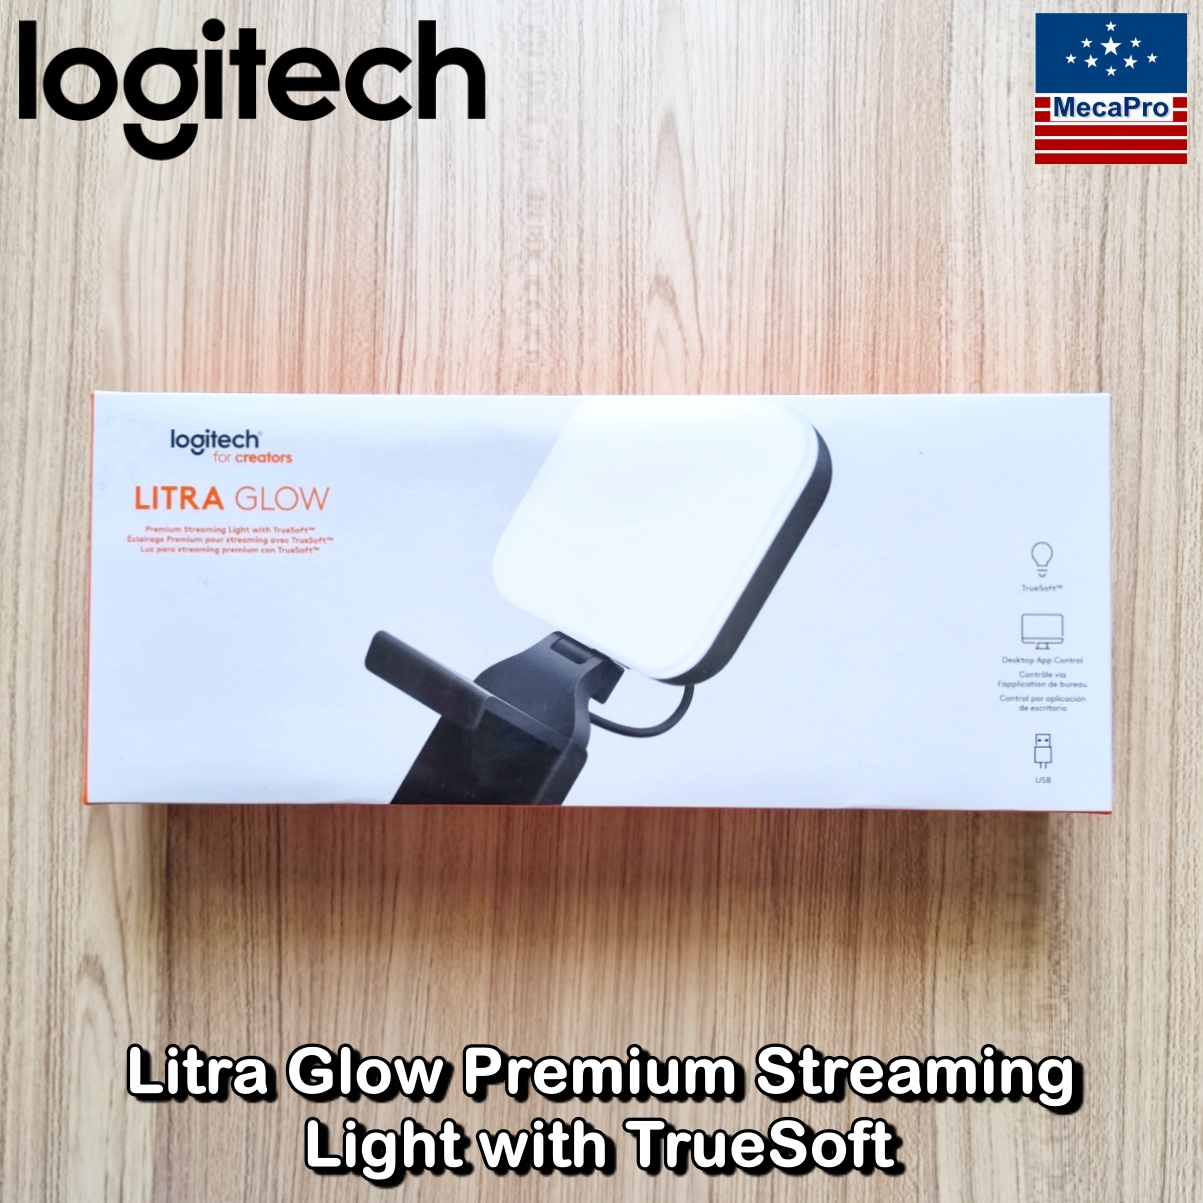 Logitech Litra Glow LED Luz Streaming Premium con TrueSoft